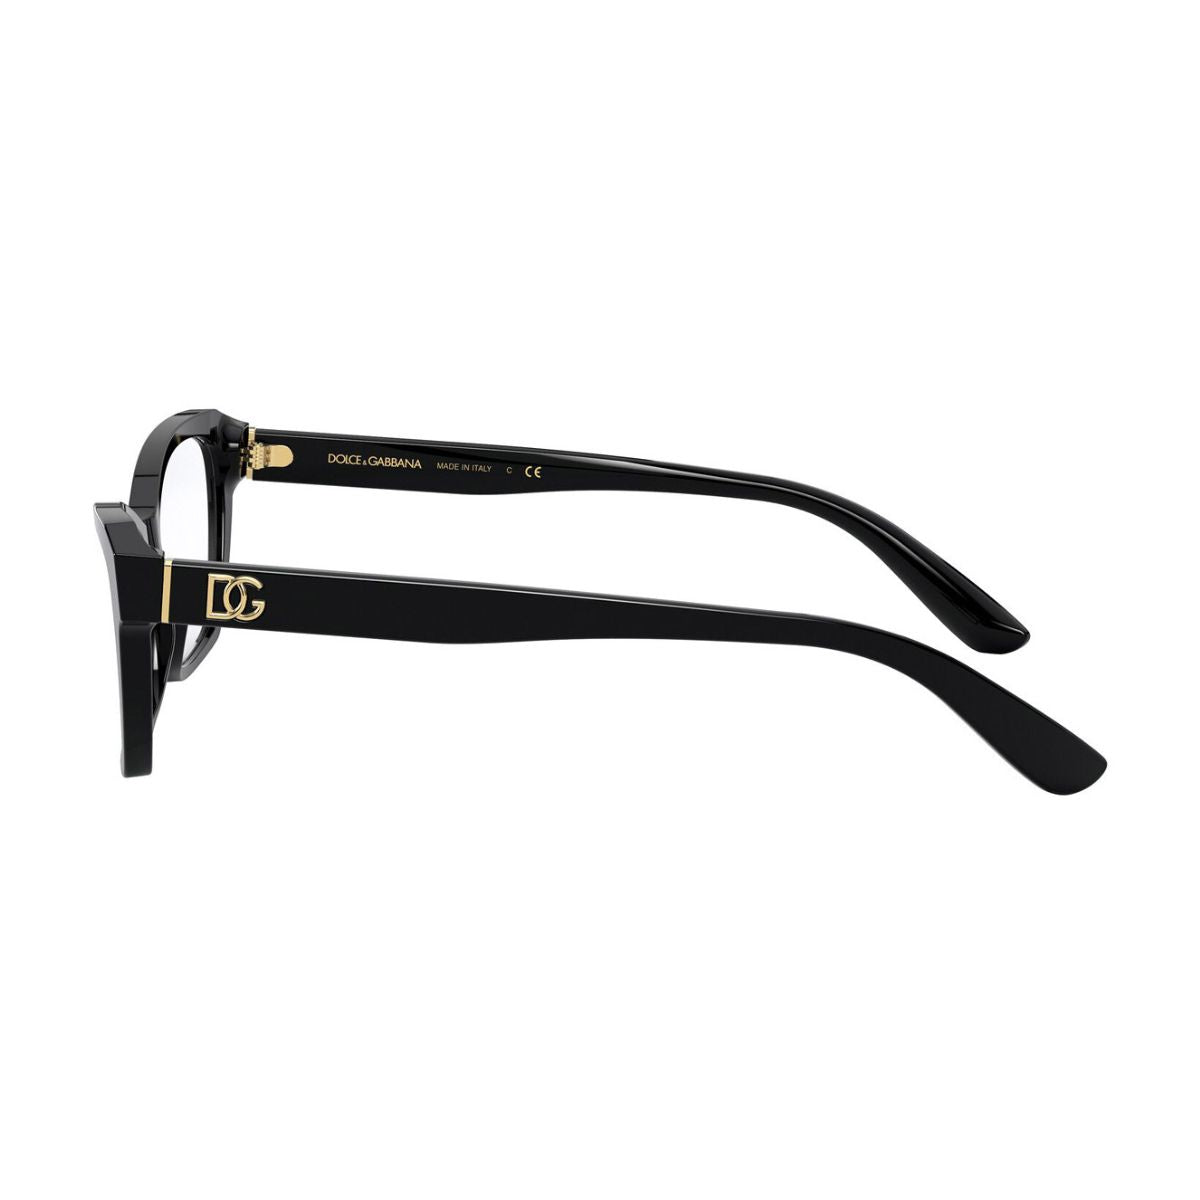 "Dolce&Gabbana 3328 501 stylish cat eye frame for women's at optorium"